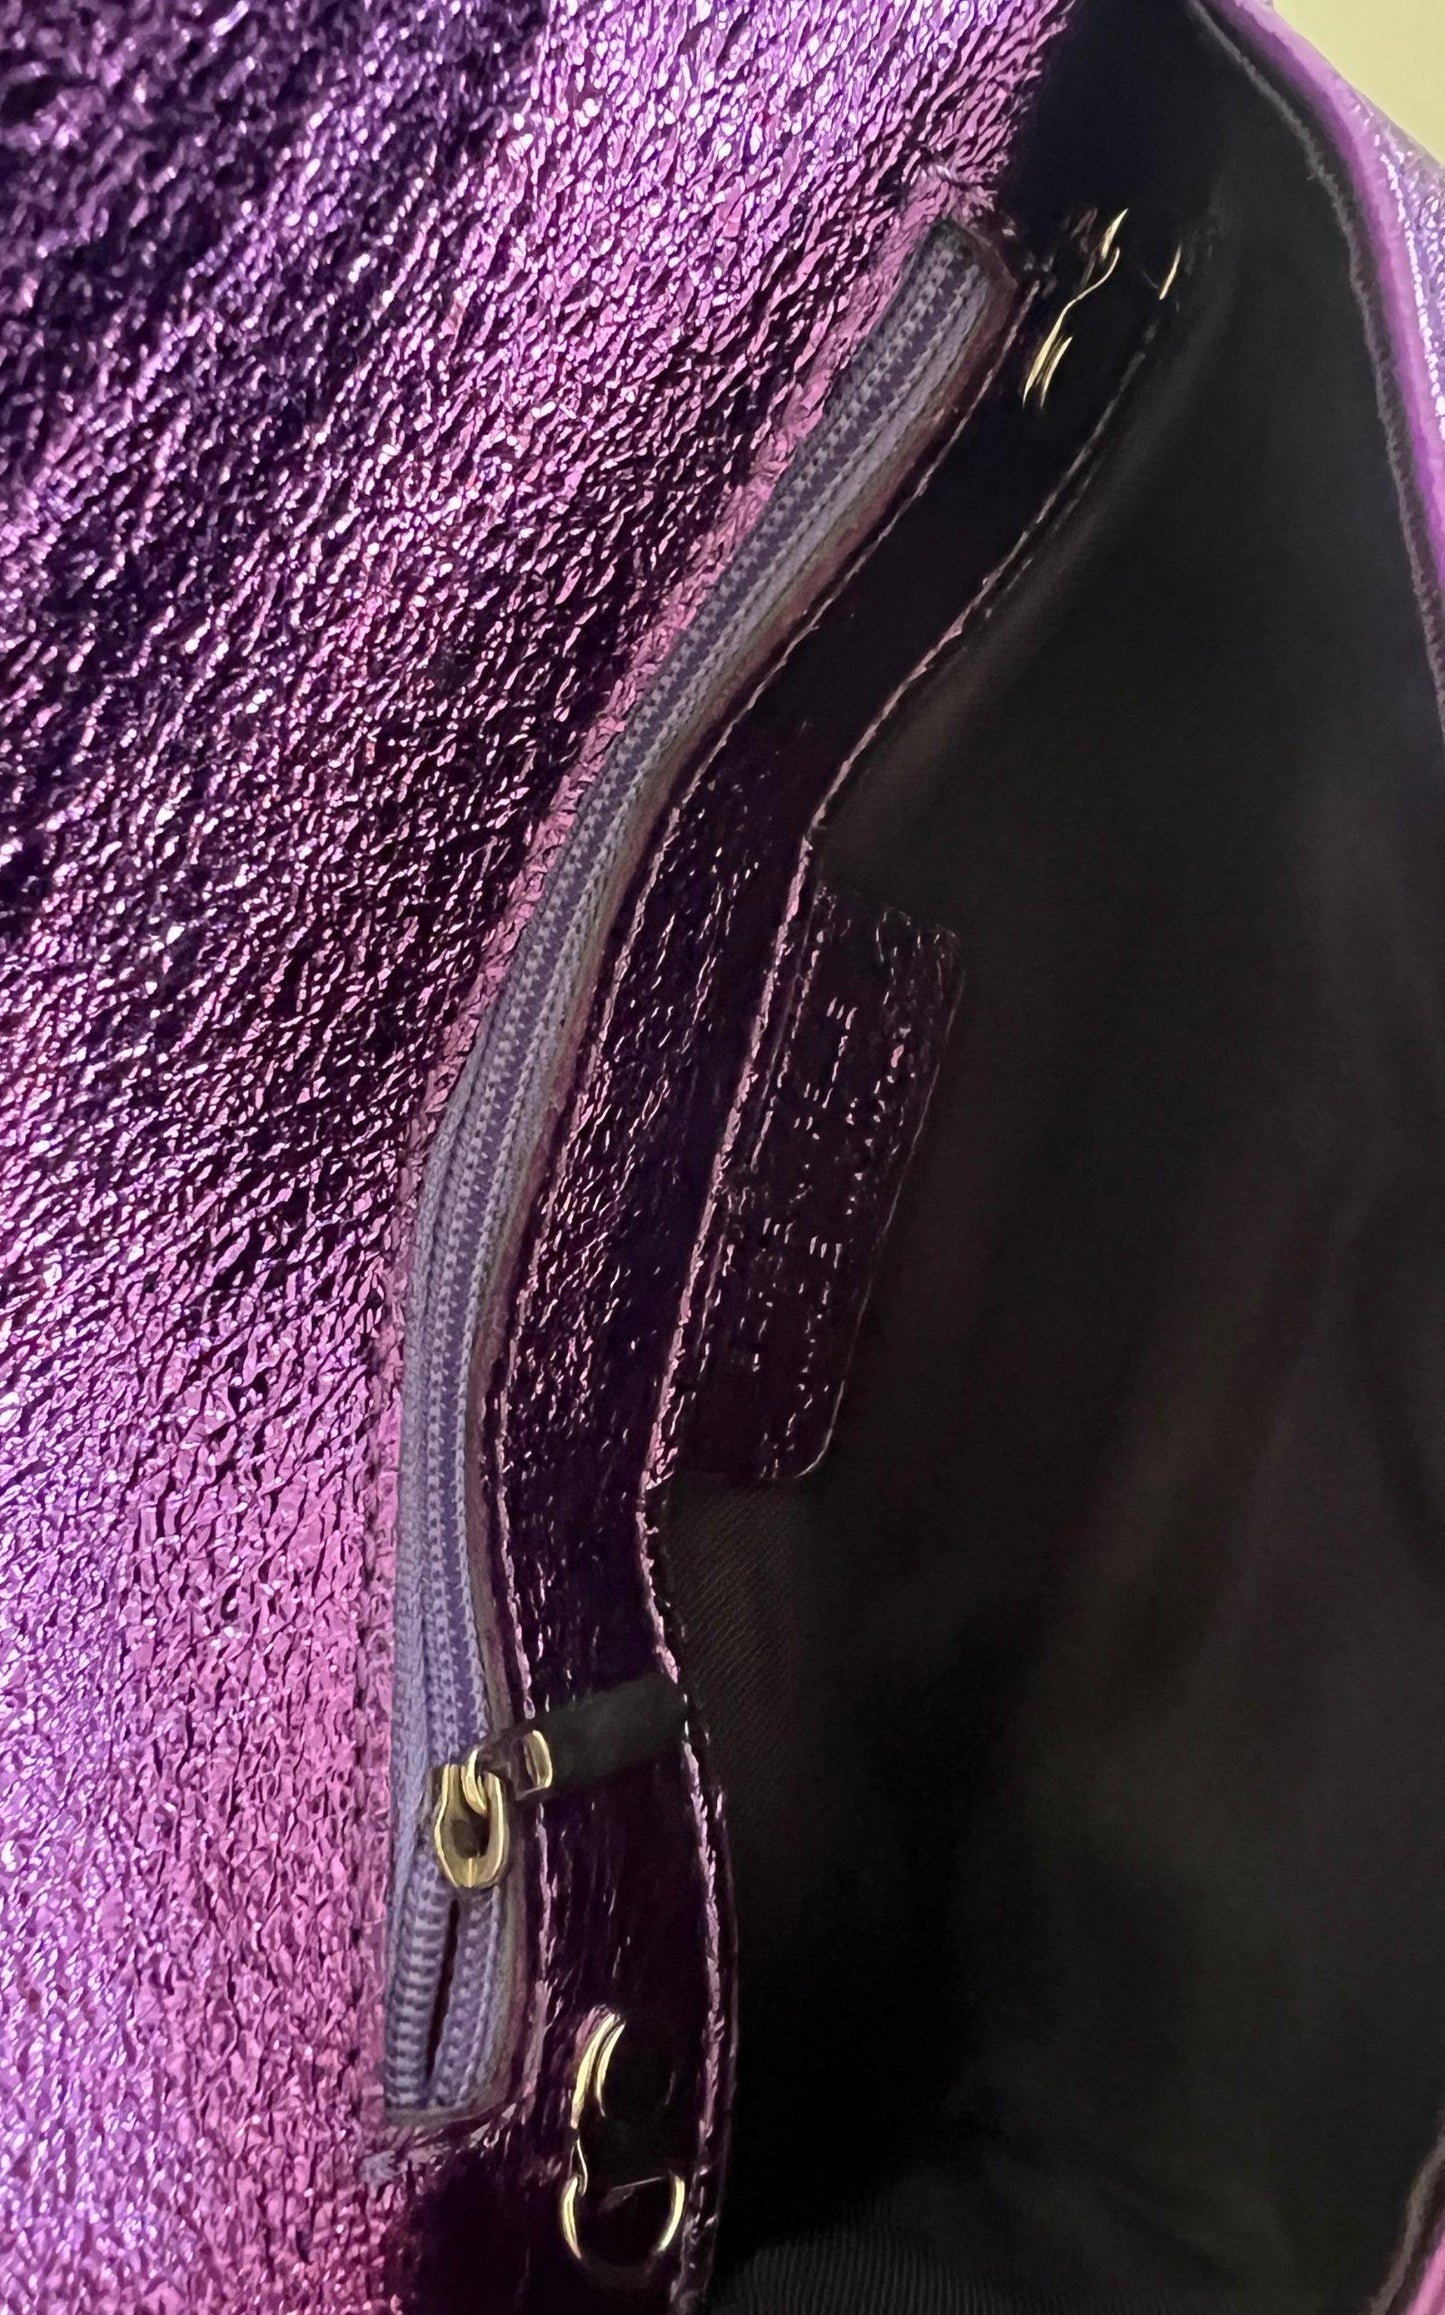 Single Handle Wristlet Crossbody Bag in Purple